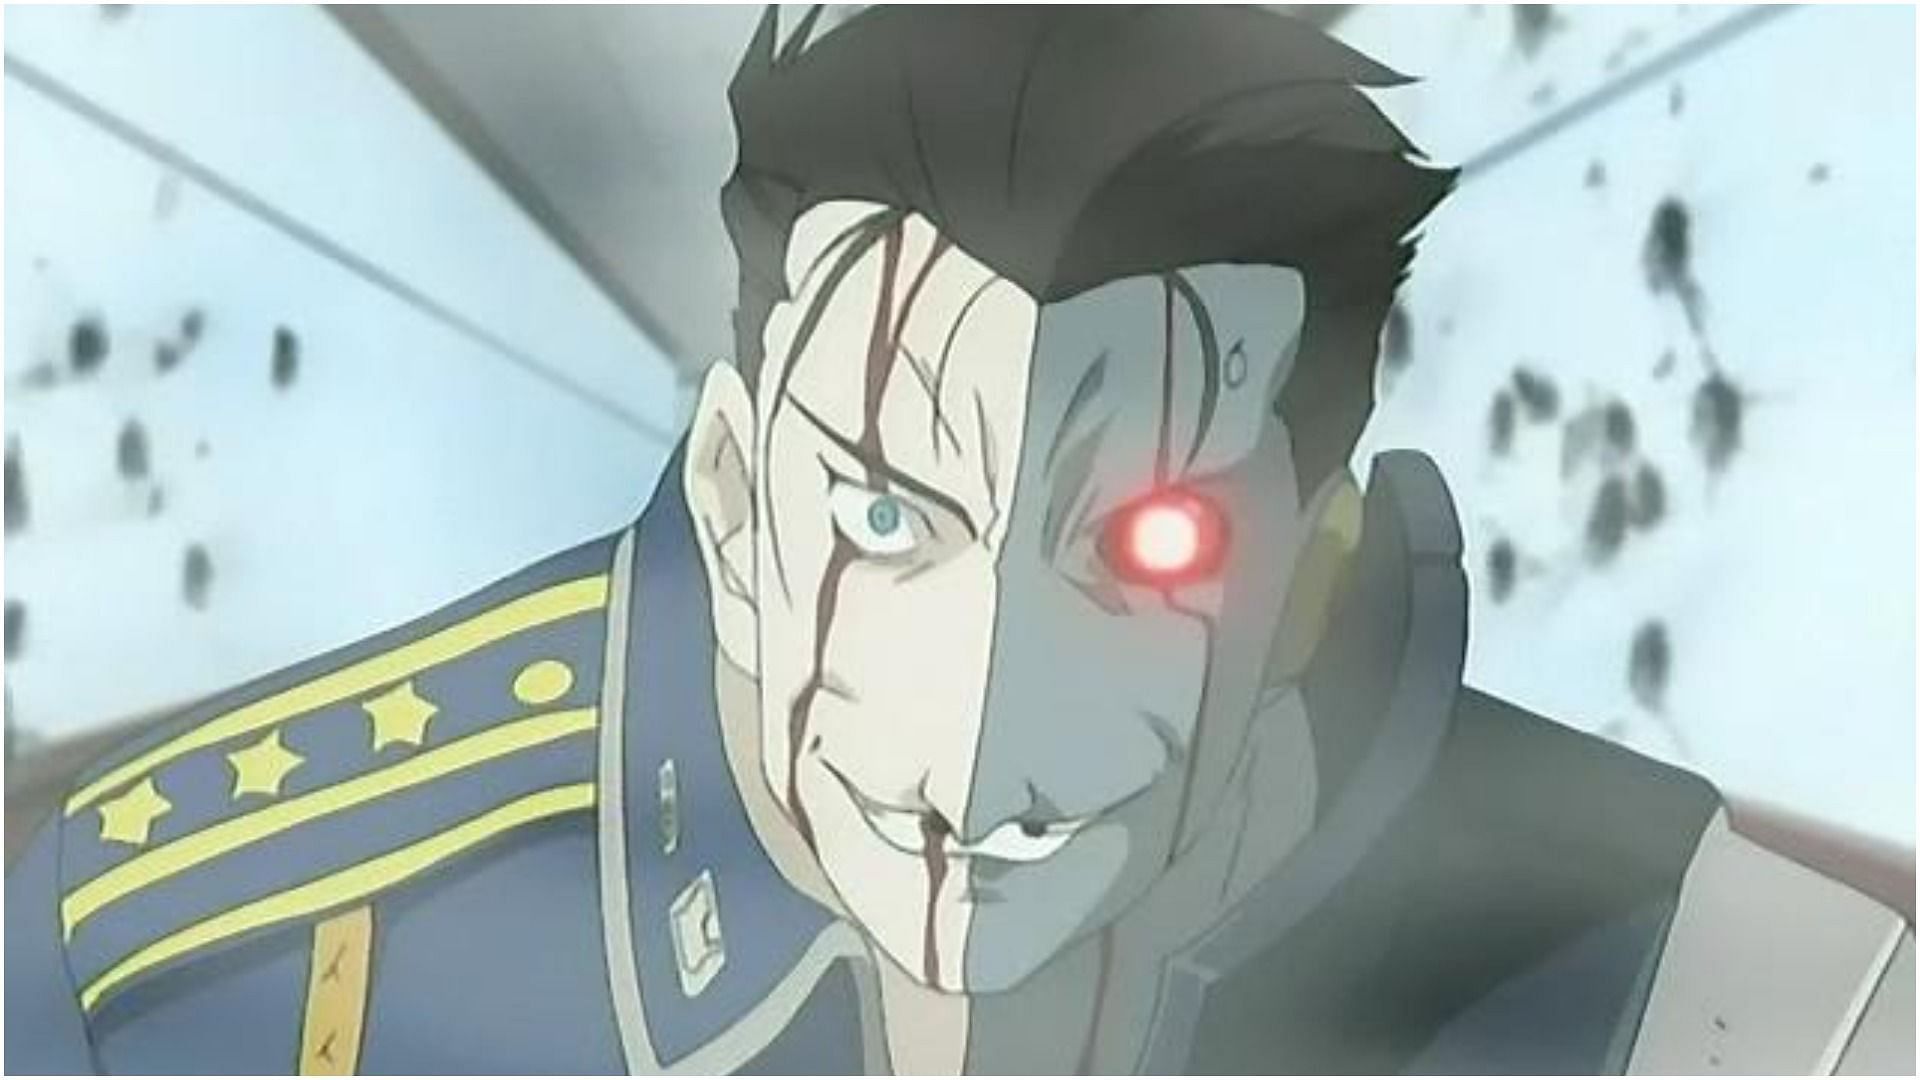 Frank Archer as seen in the anime Full Metal Alchemist (Image via Studio Bones)